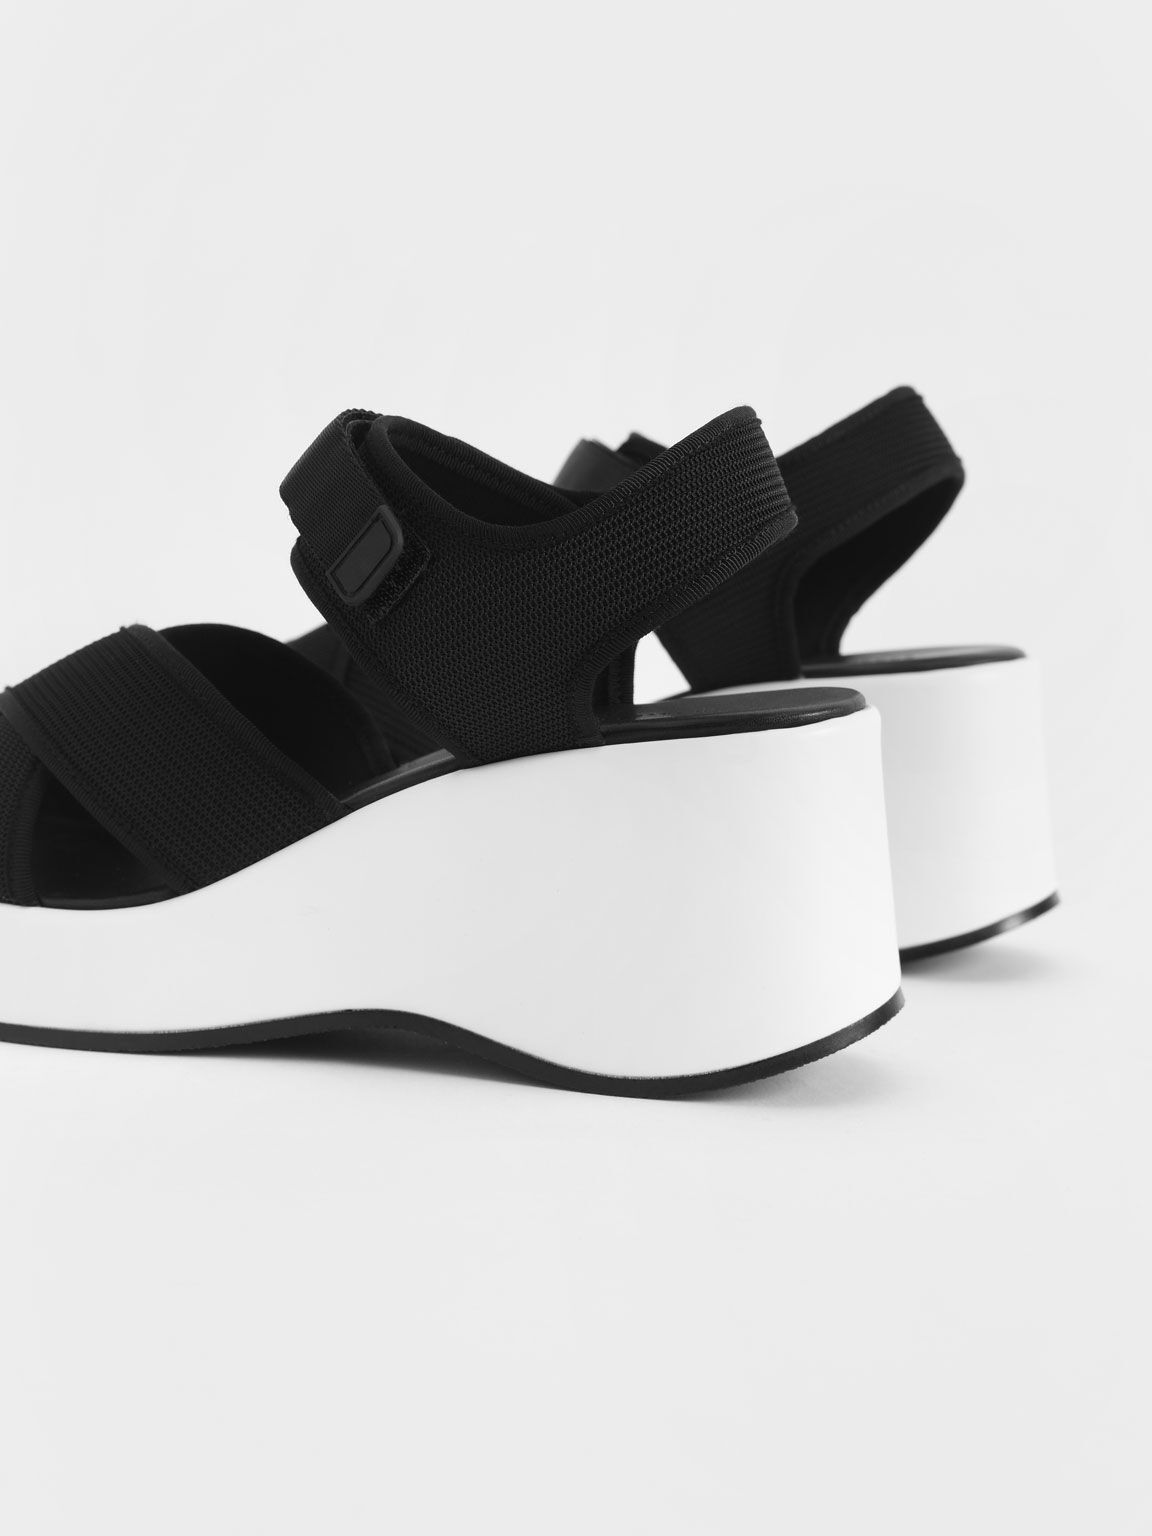 Sepatu Wedges Platform Mesh & Grosgrain, Black, hi-res